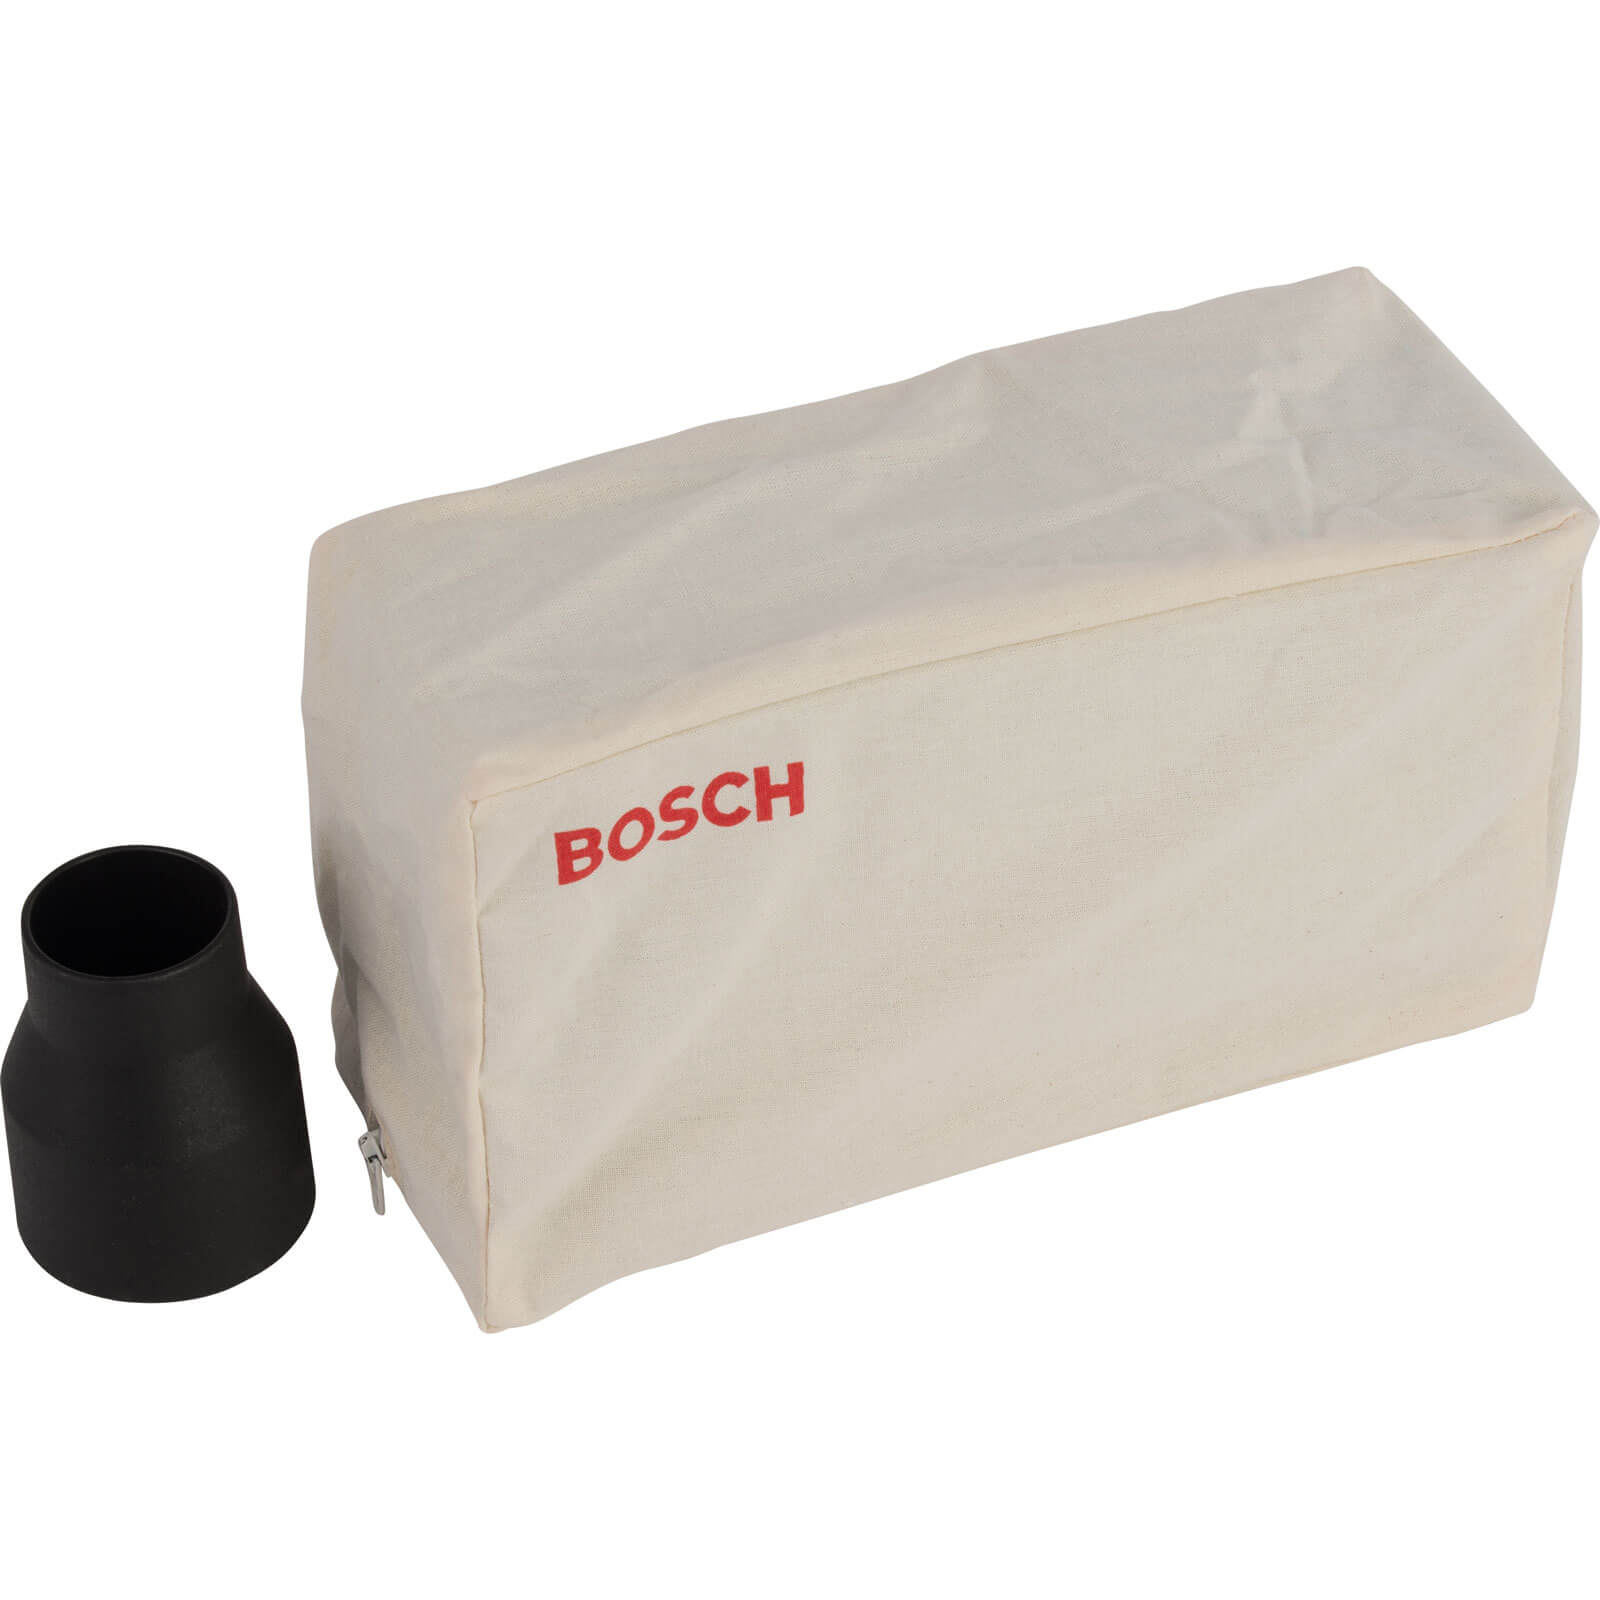 Photo of Bosch Power Tool Dust Bag